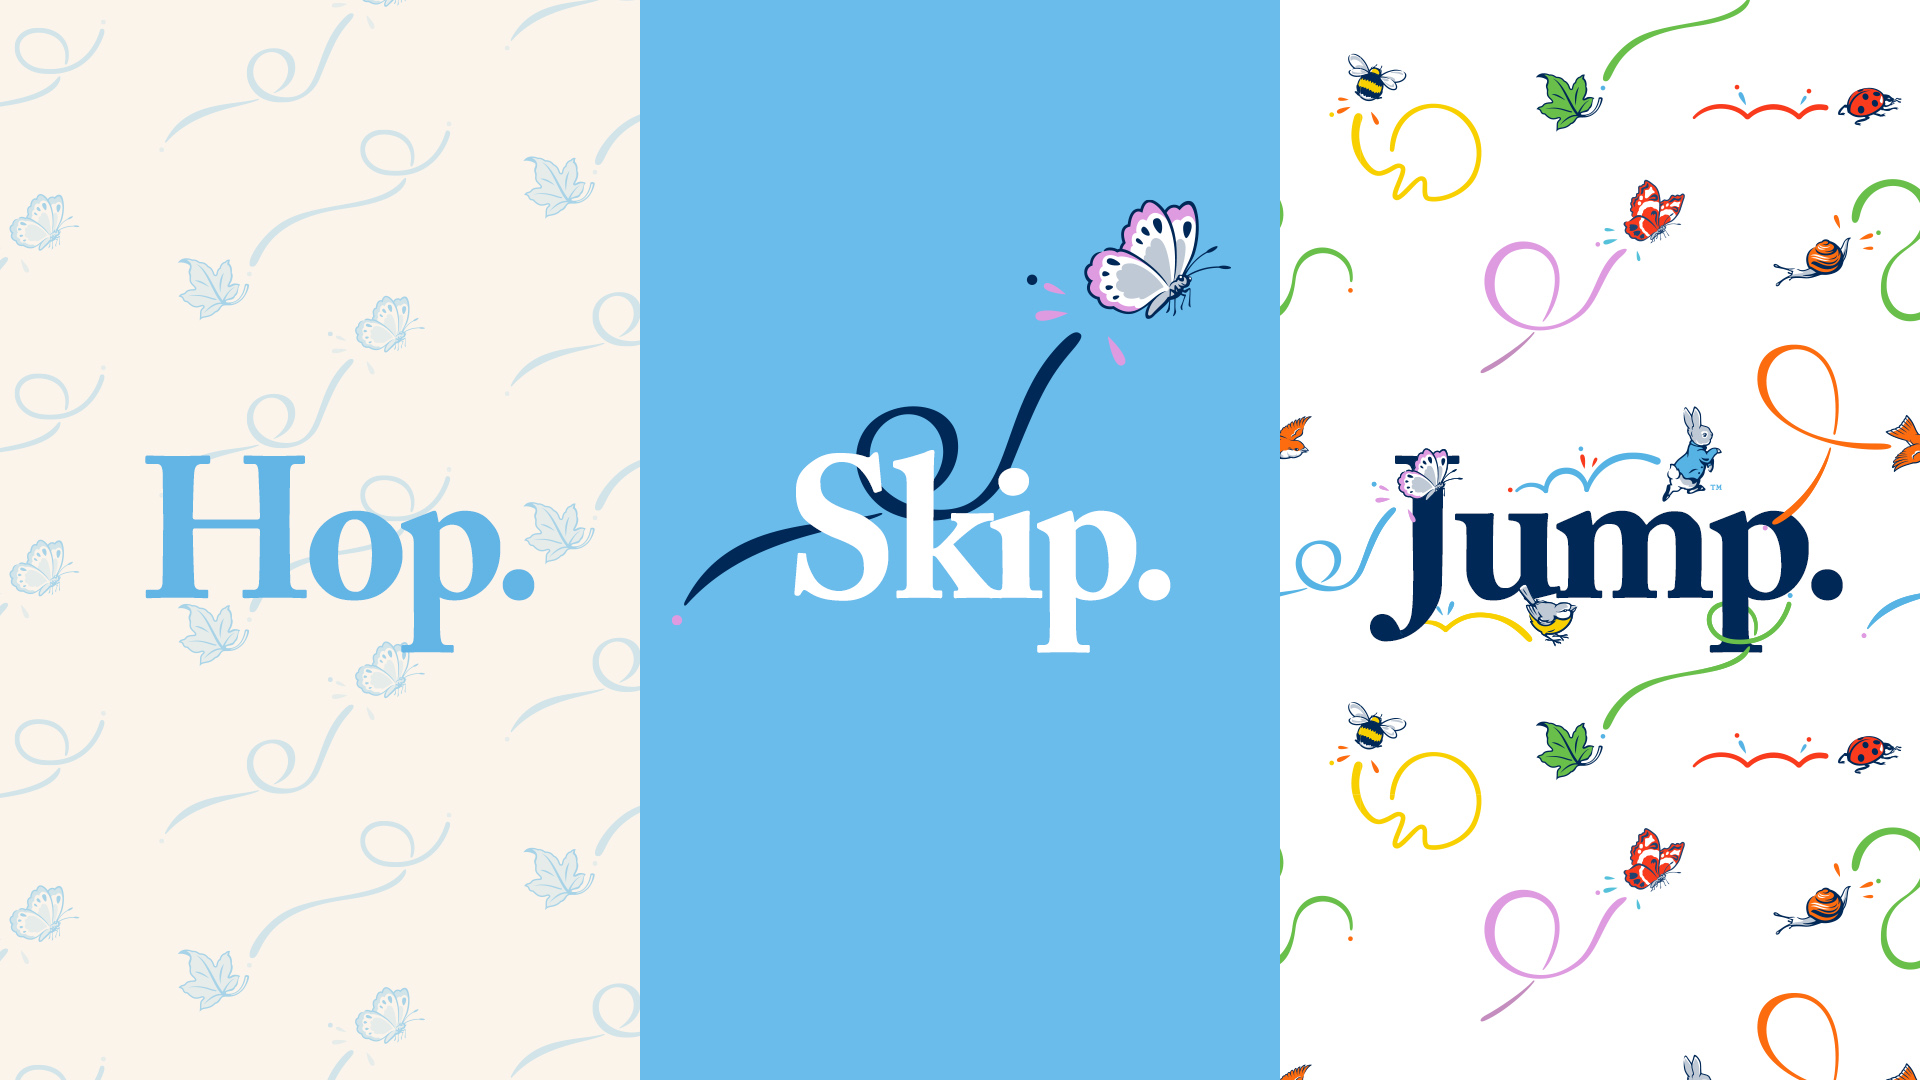 Hop. Skip. Jump. Peter Rabbit's supporting design patterns.